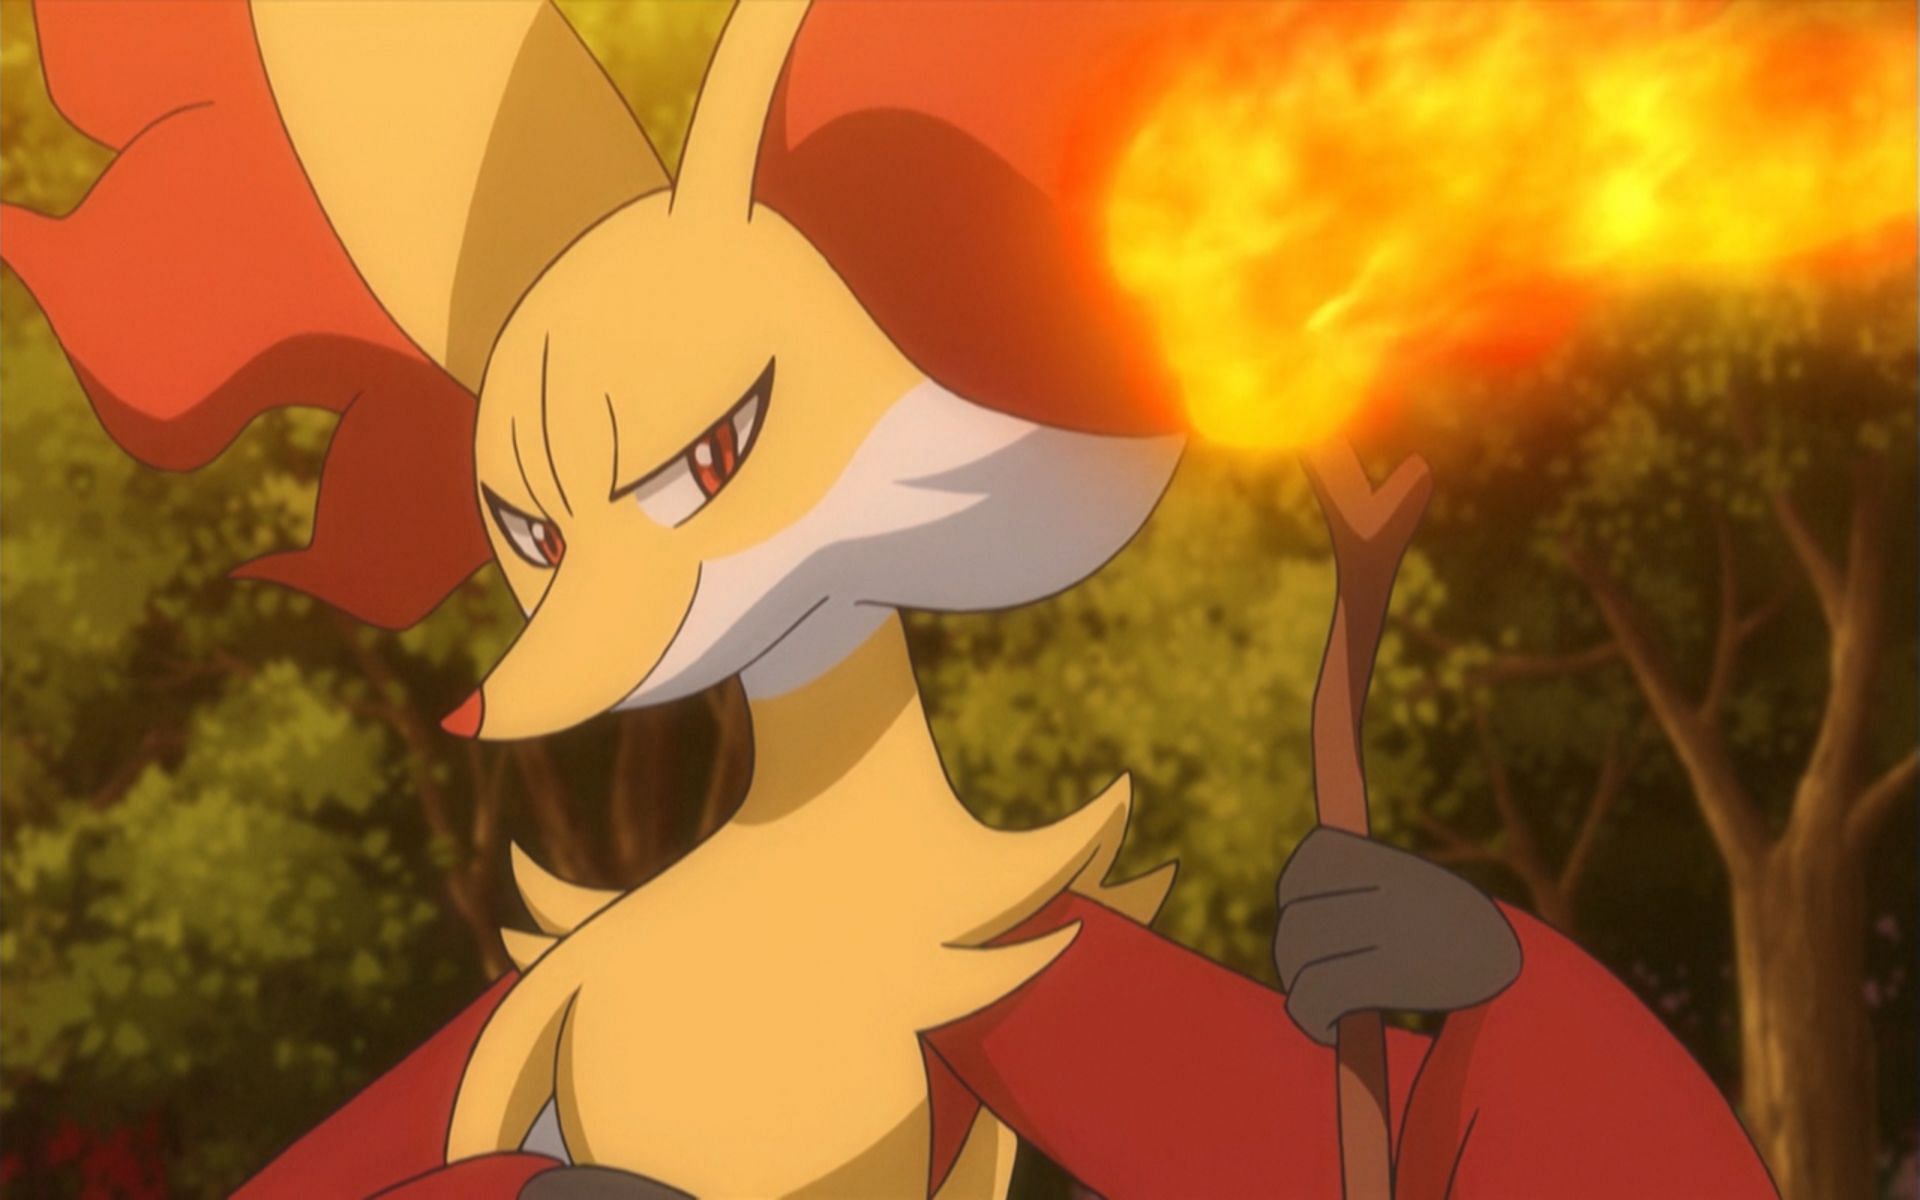 Delphox is a Fire/Psychic-type (Image via The Pokemon Company)